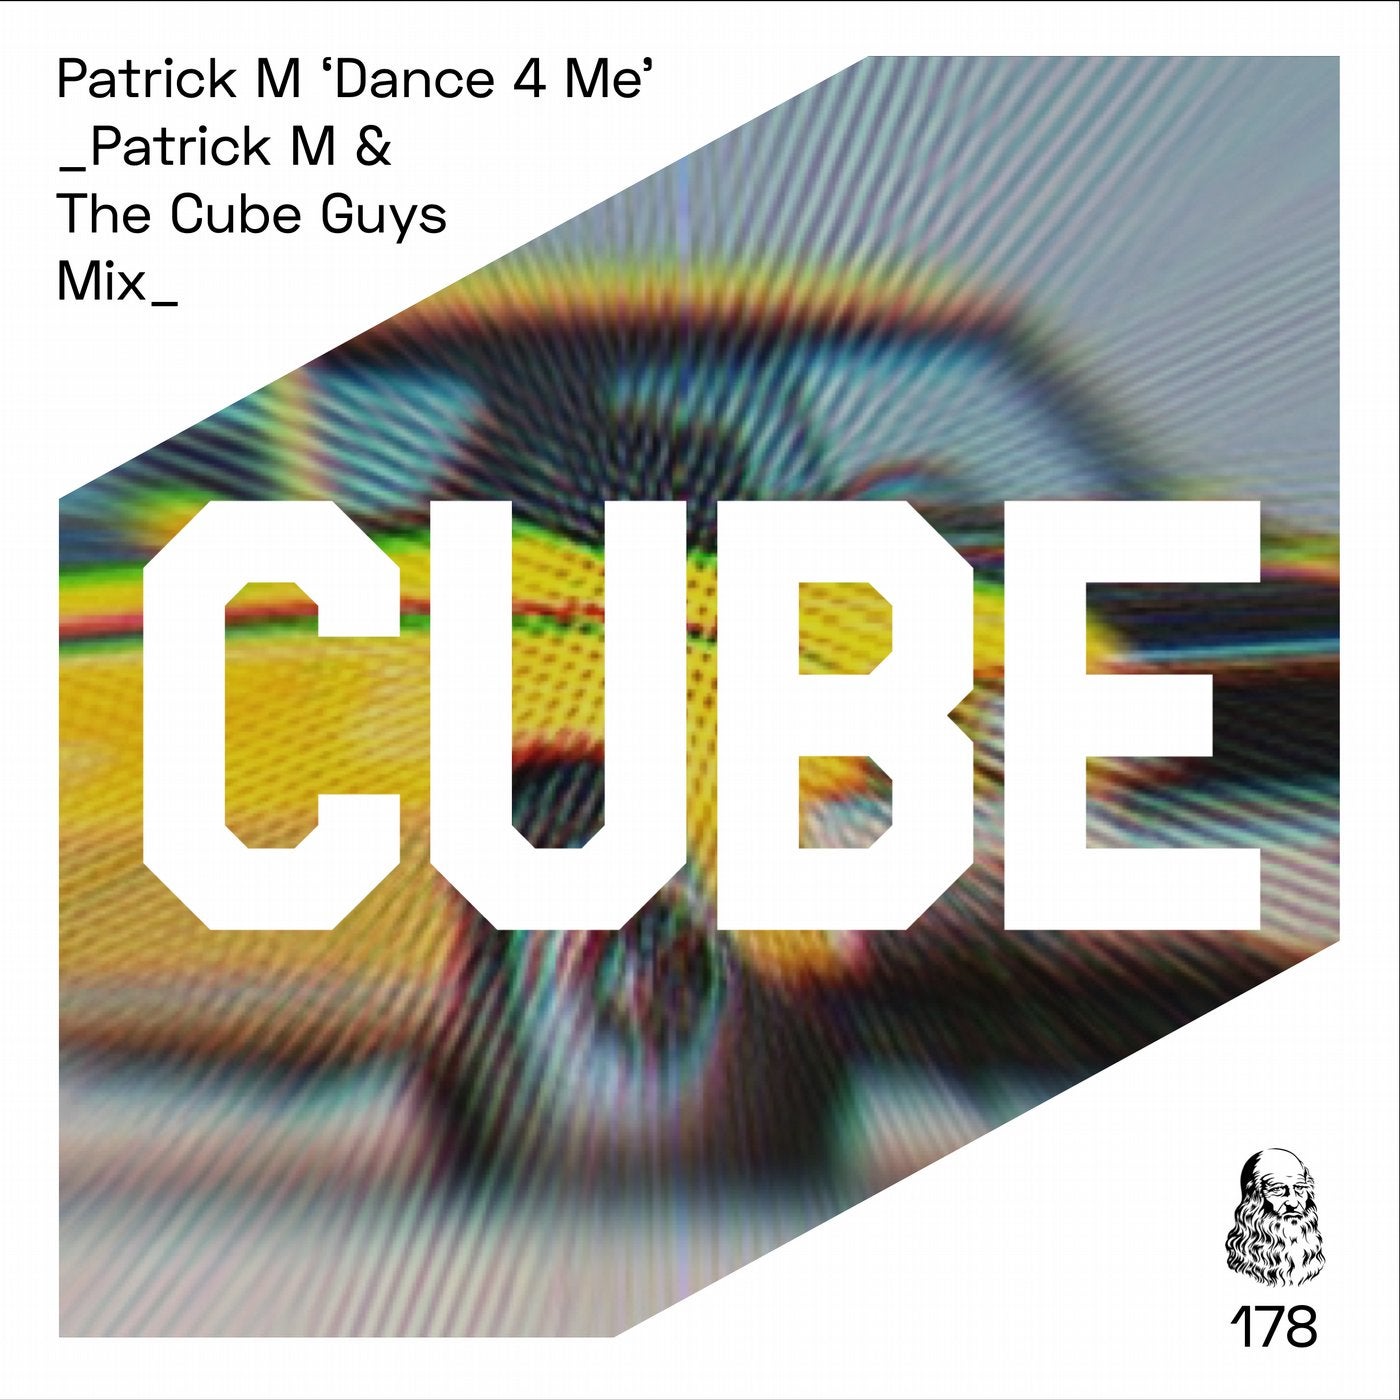 Cube remix. Cube records.